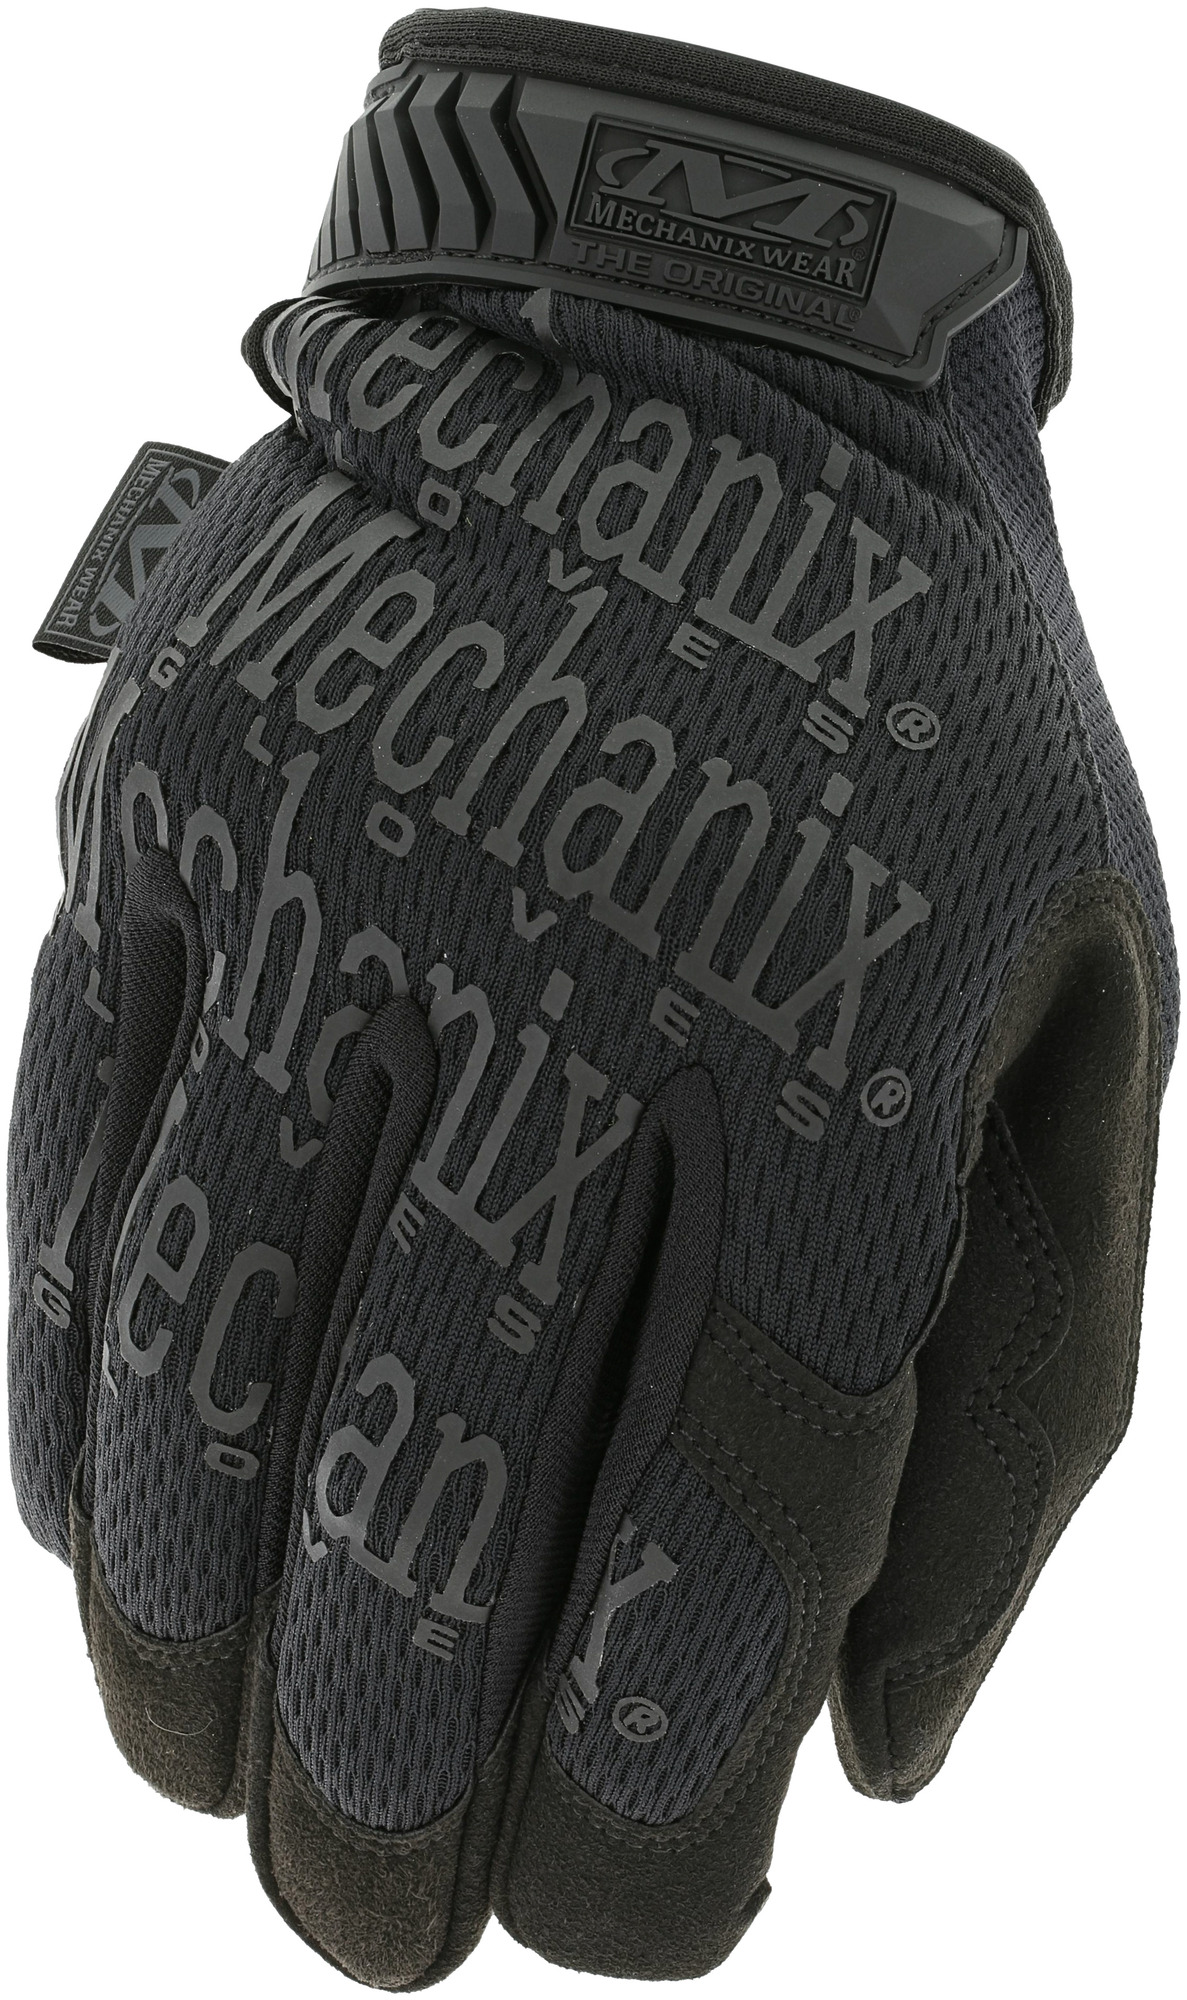 MECHANIX rukavice so syntetickou kožou Original - Covert - čierne XL/11